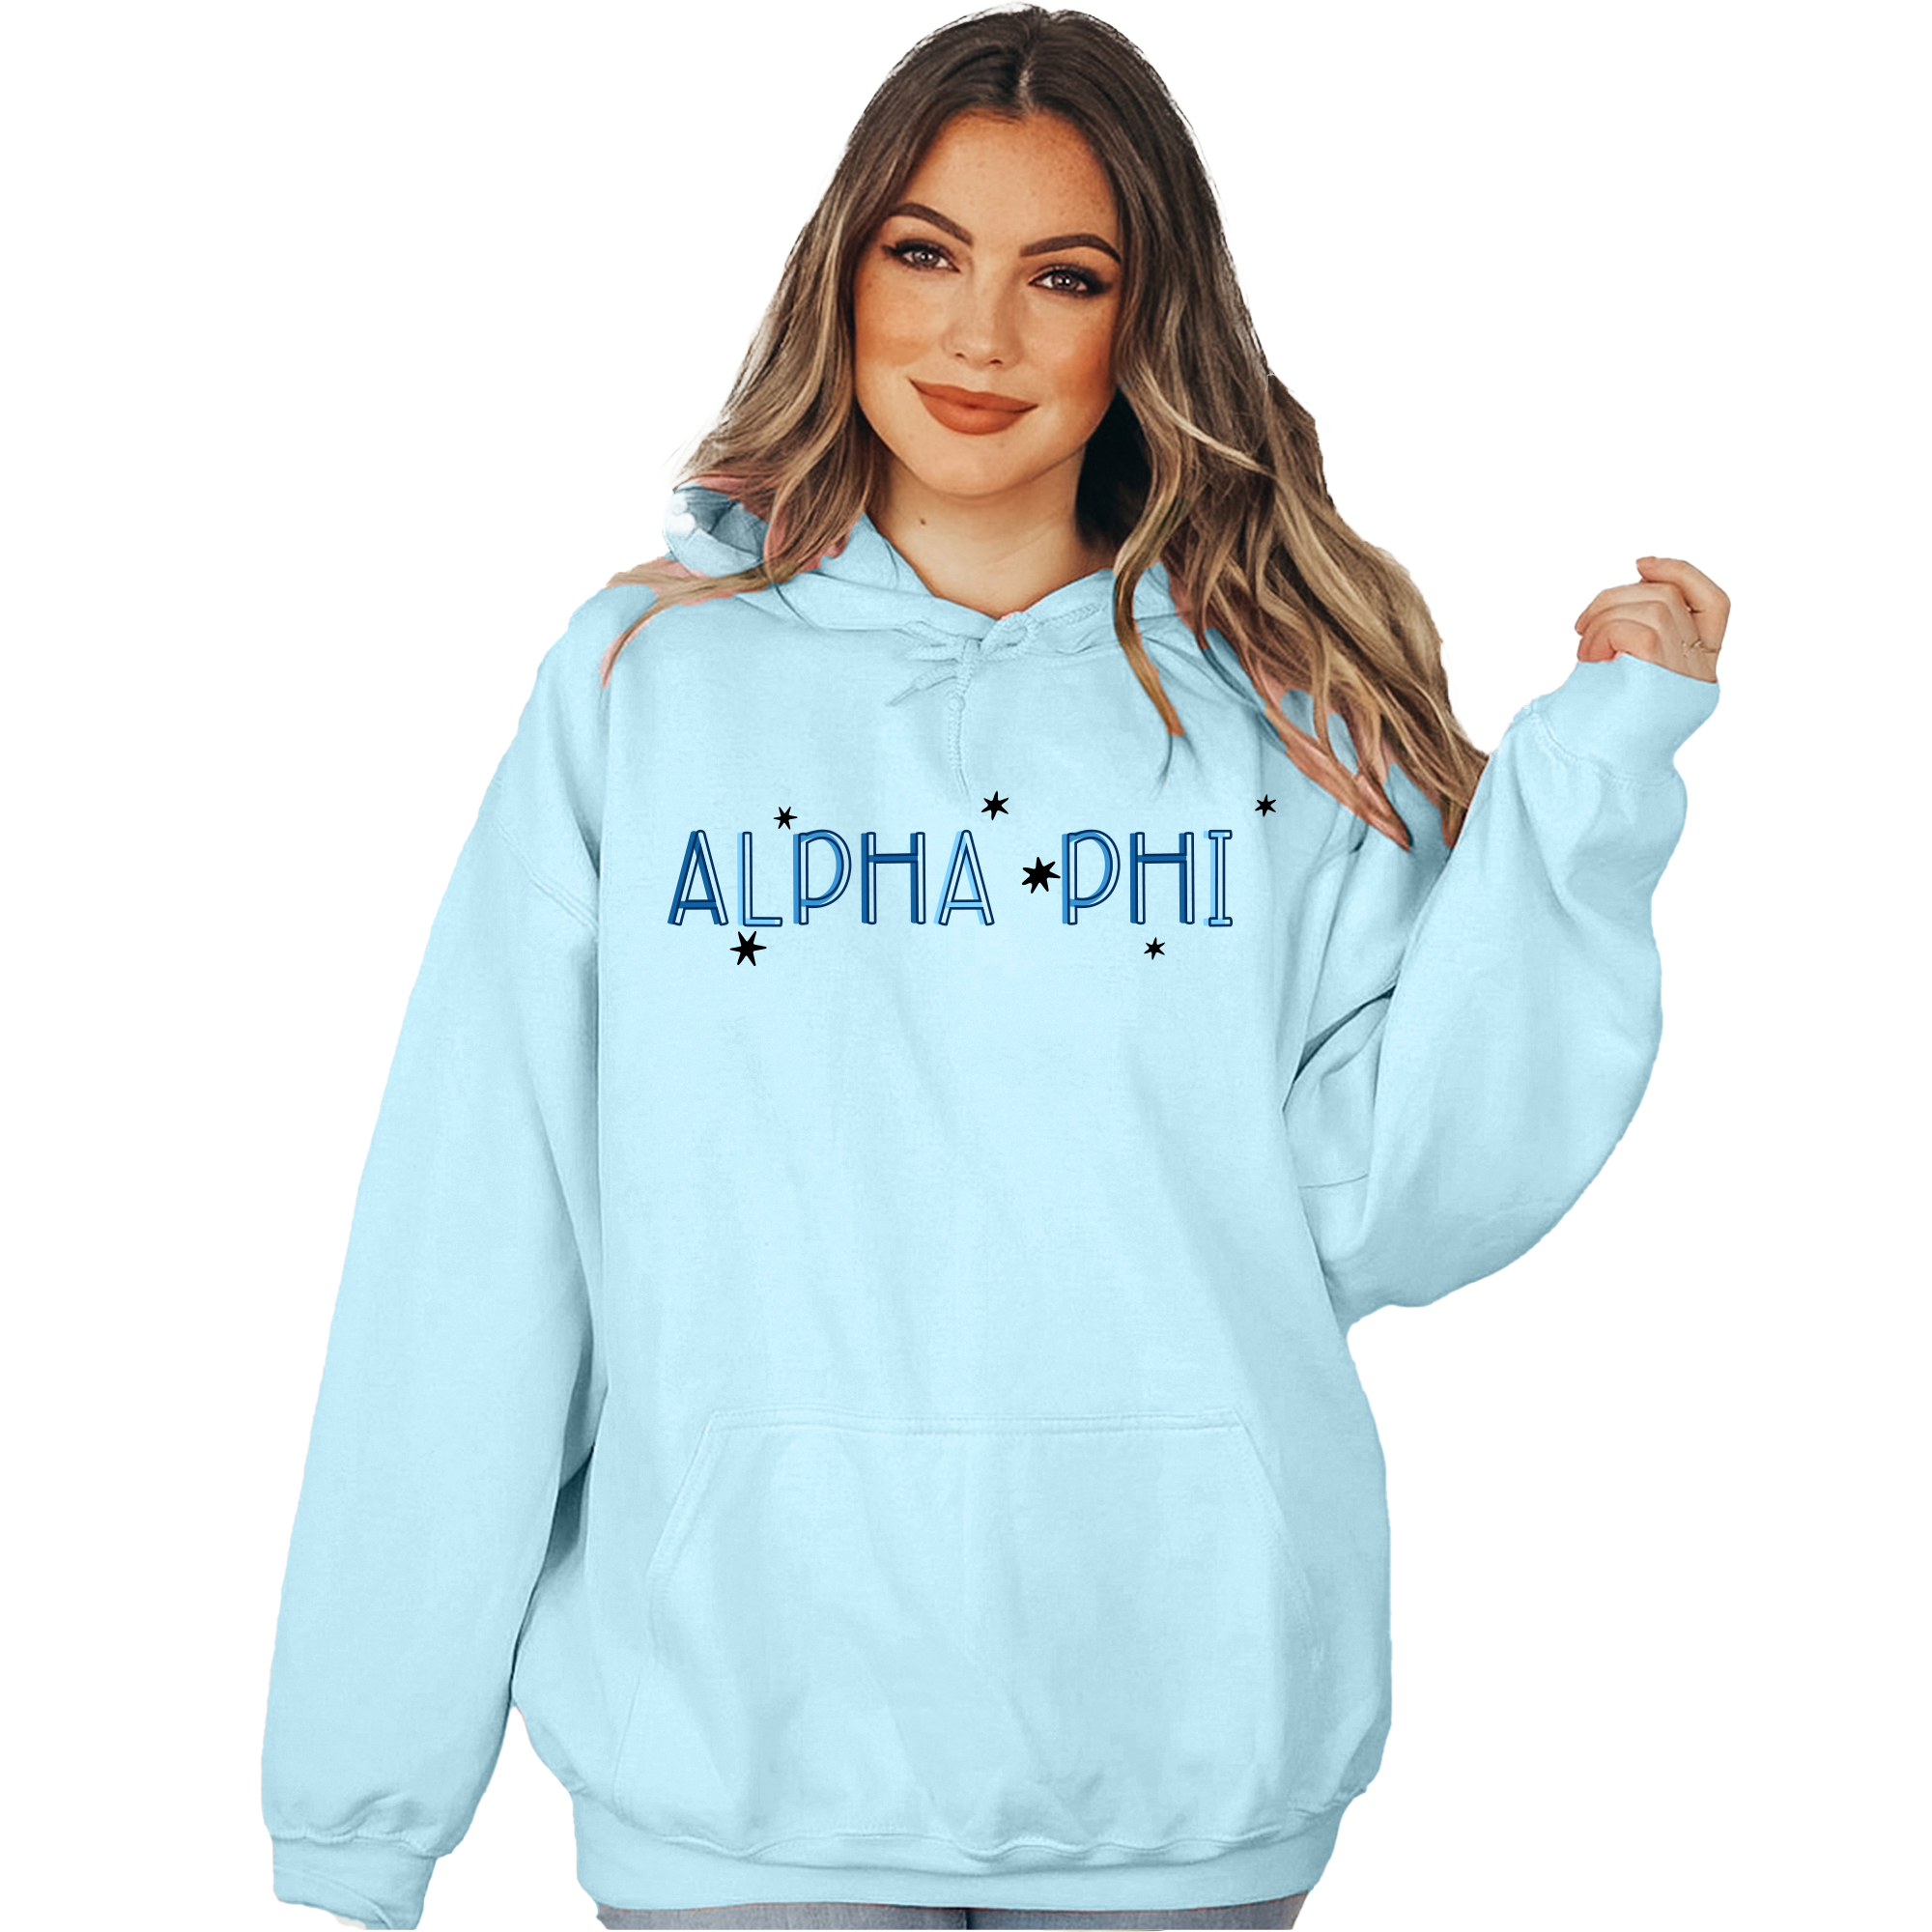 Alpha Phi Hoodie - Sparkle, Blue Hoodie, Greek Apparel, Big Little Reveal, Initiation - Go Greek Chic